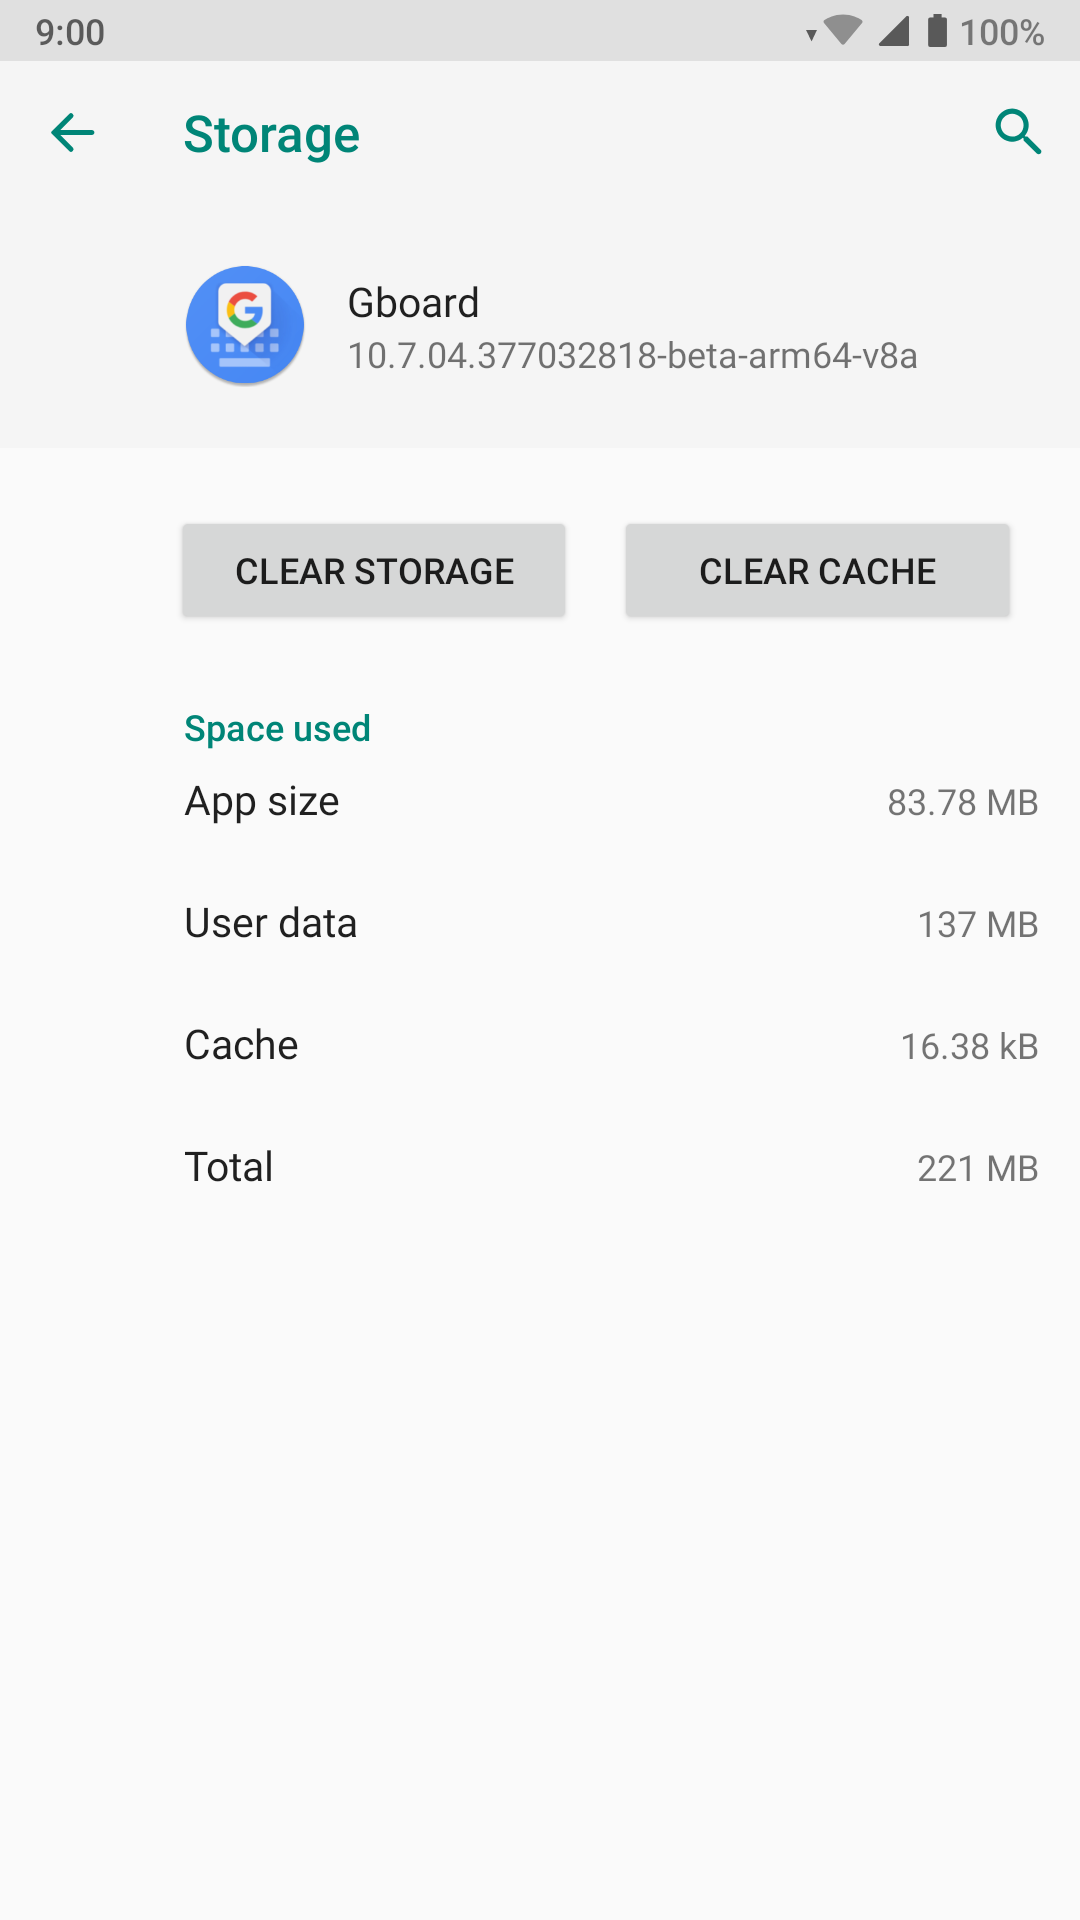 Gboard - App Storage